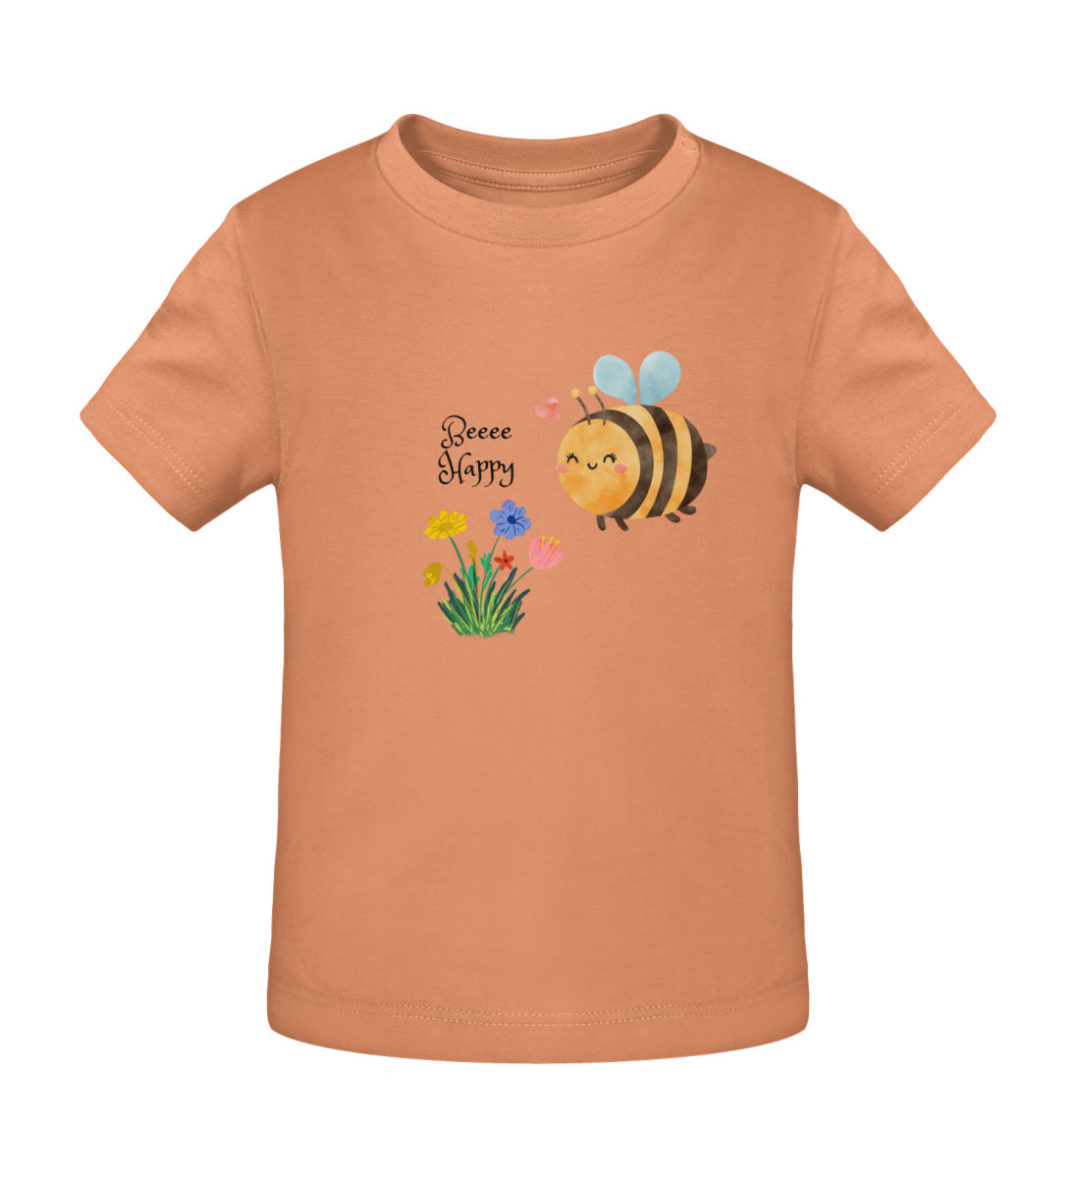 Beee happy - Baby Creator T-Shirt ST/ST-7101